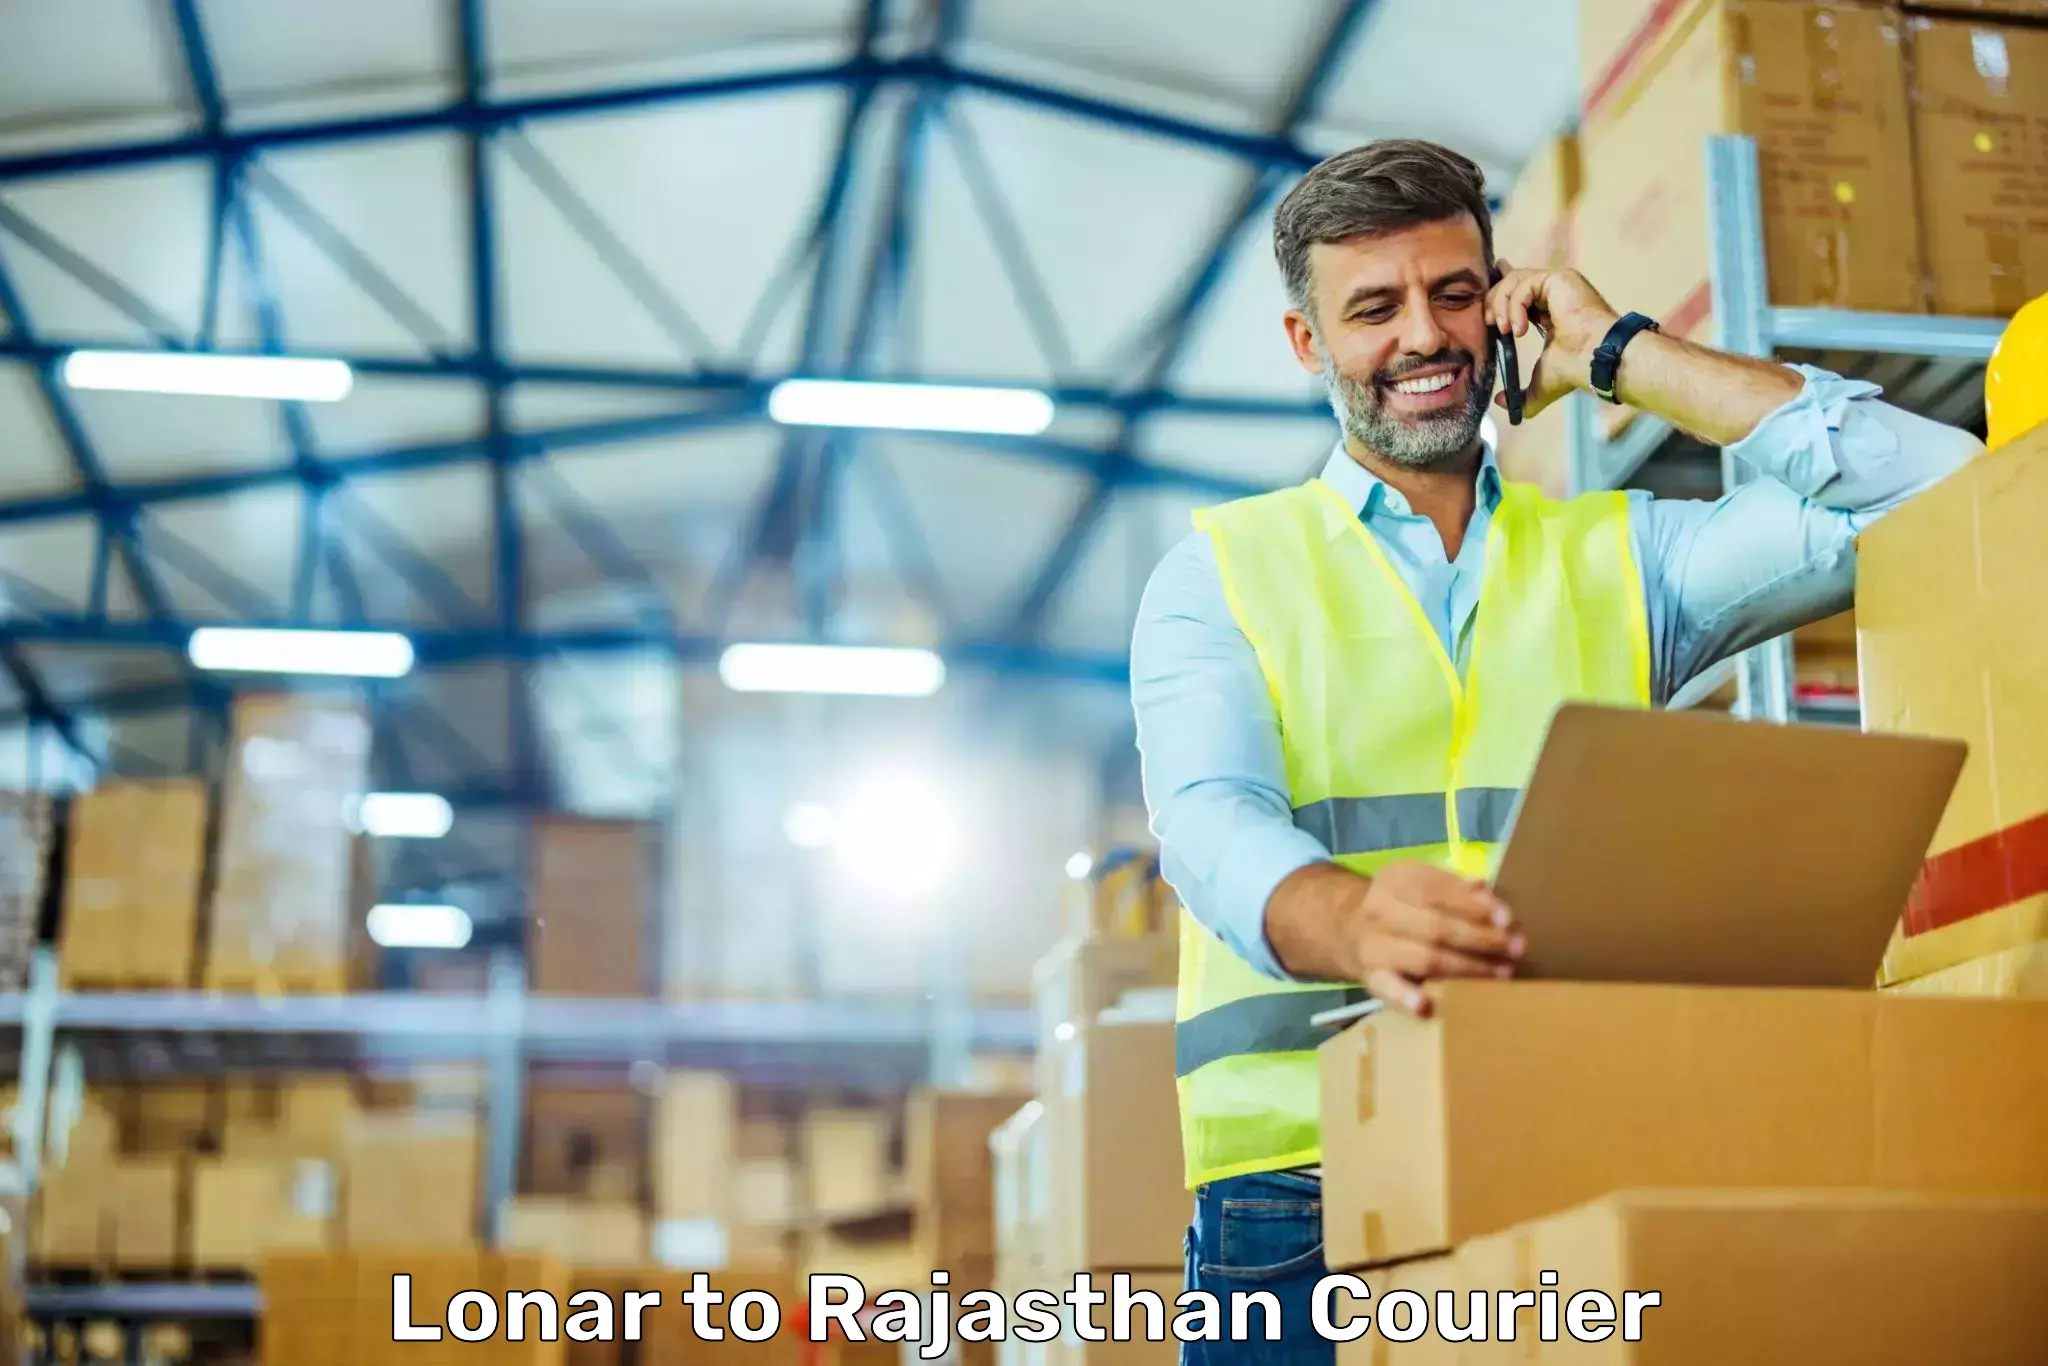 Courier service comparison Lonar to Rajasthan